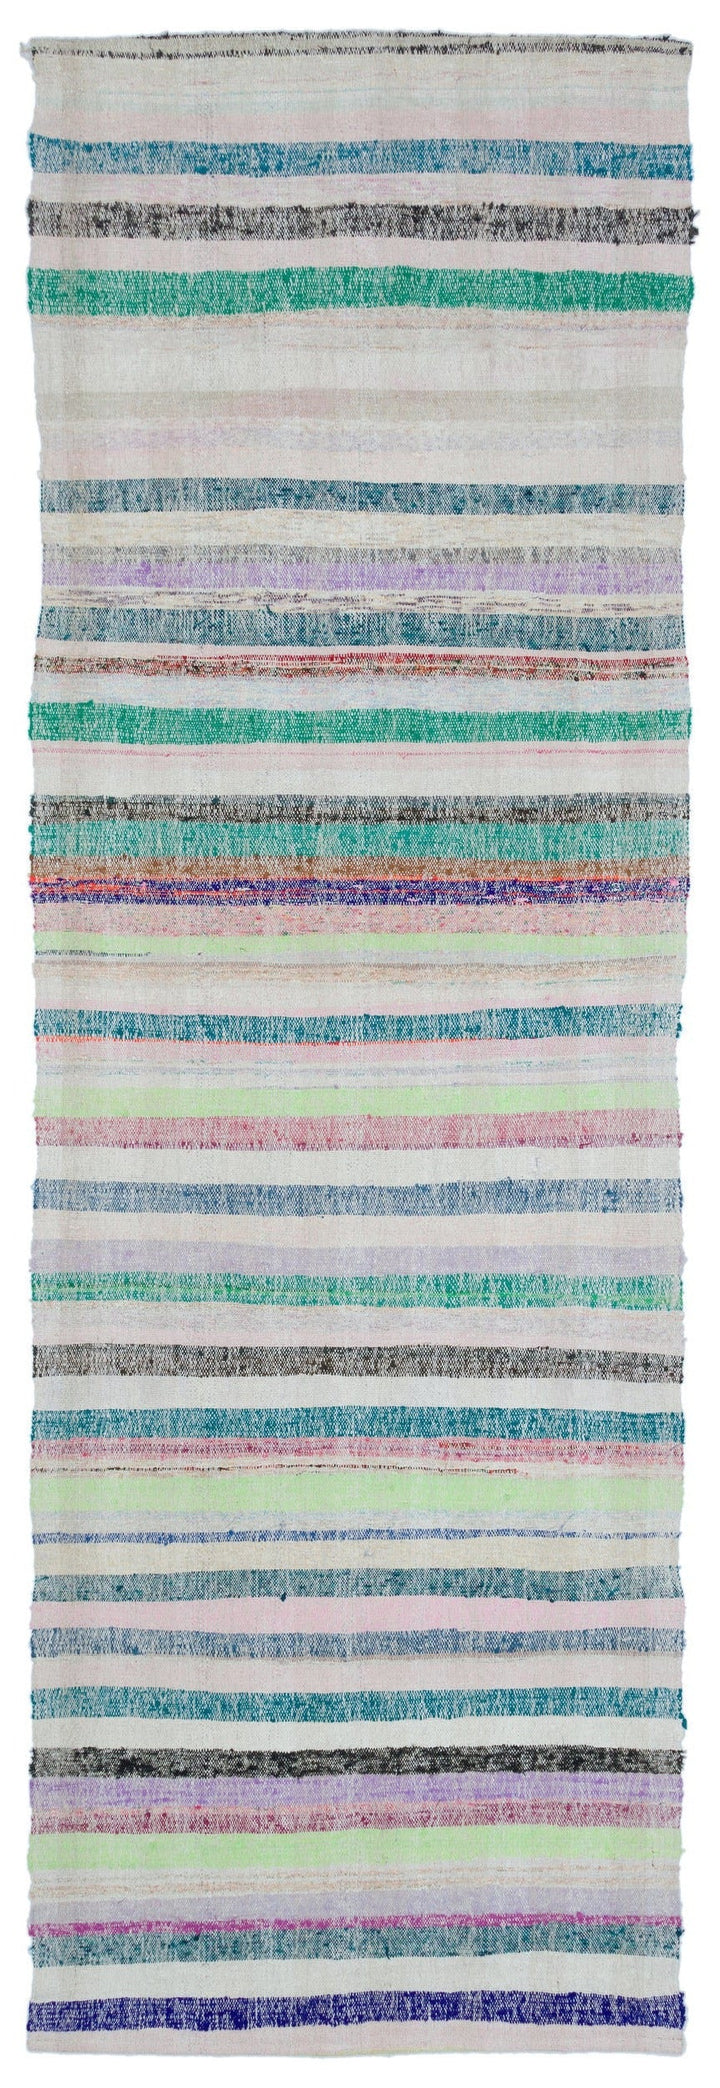 Cretan Beige Striped Wool Hand-Woven Carpet 098 x 303